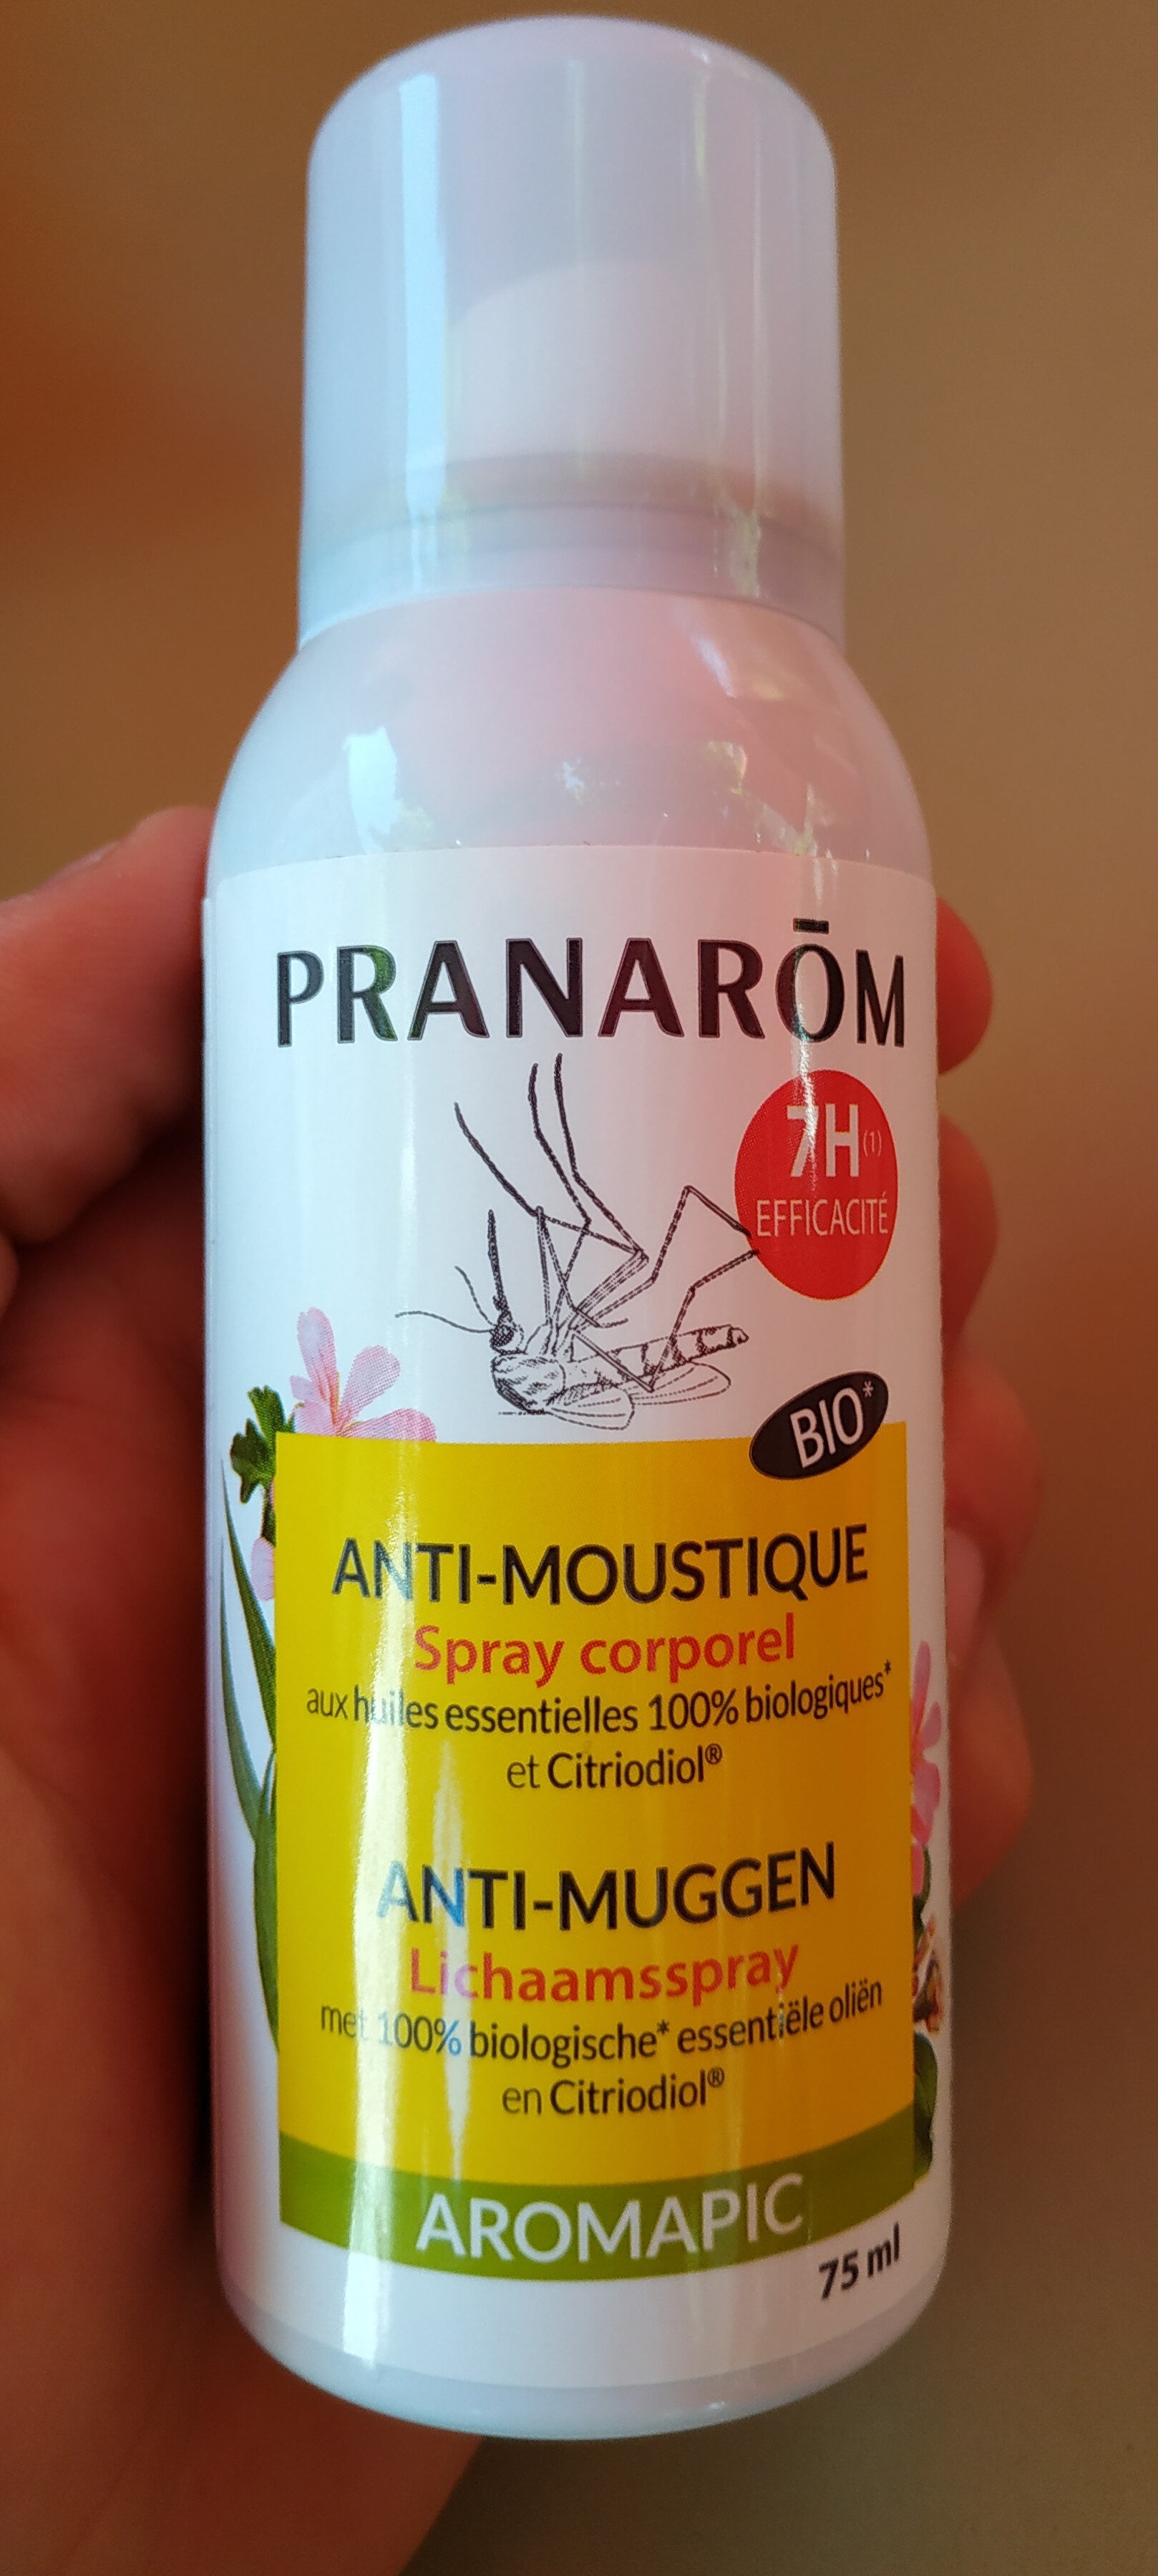 Anti-moustique spray corporel - Product - fr